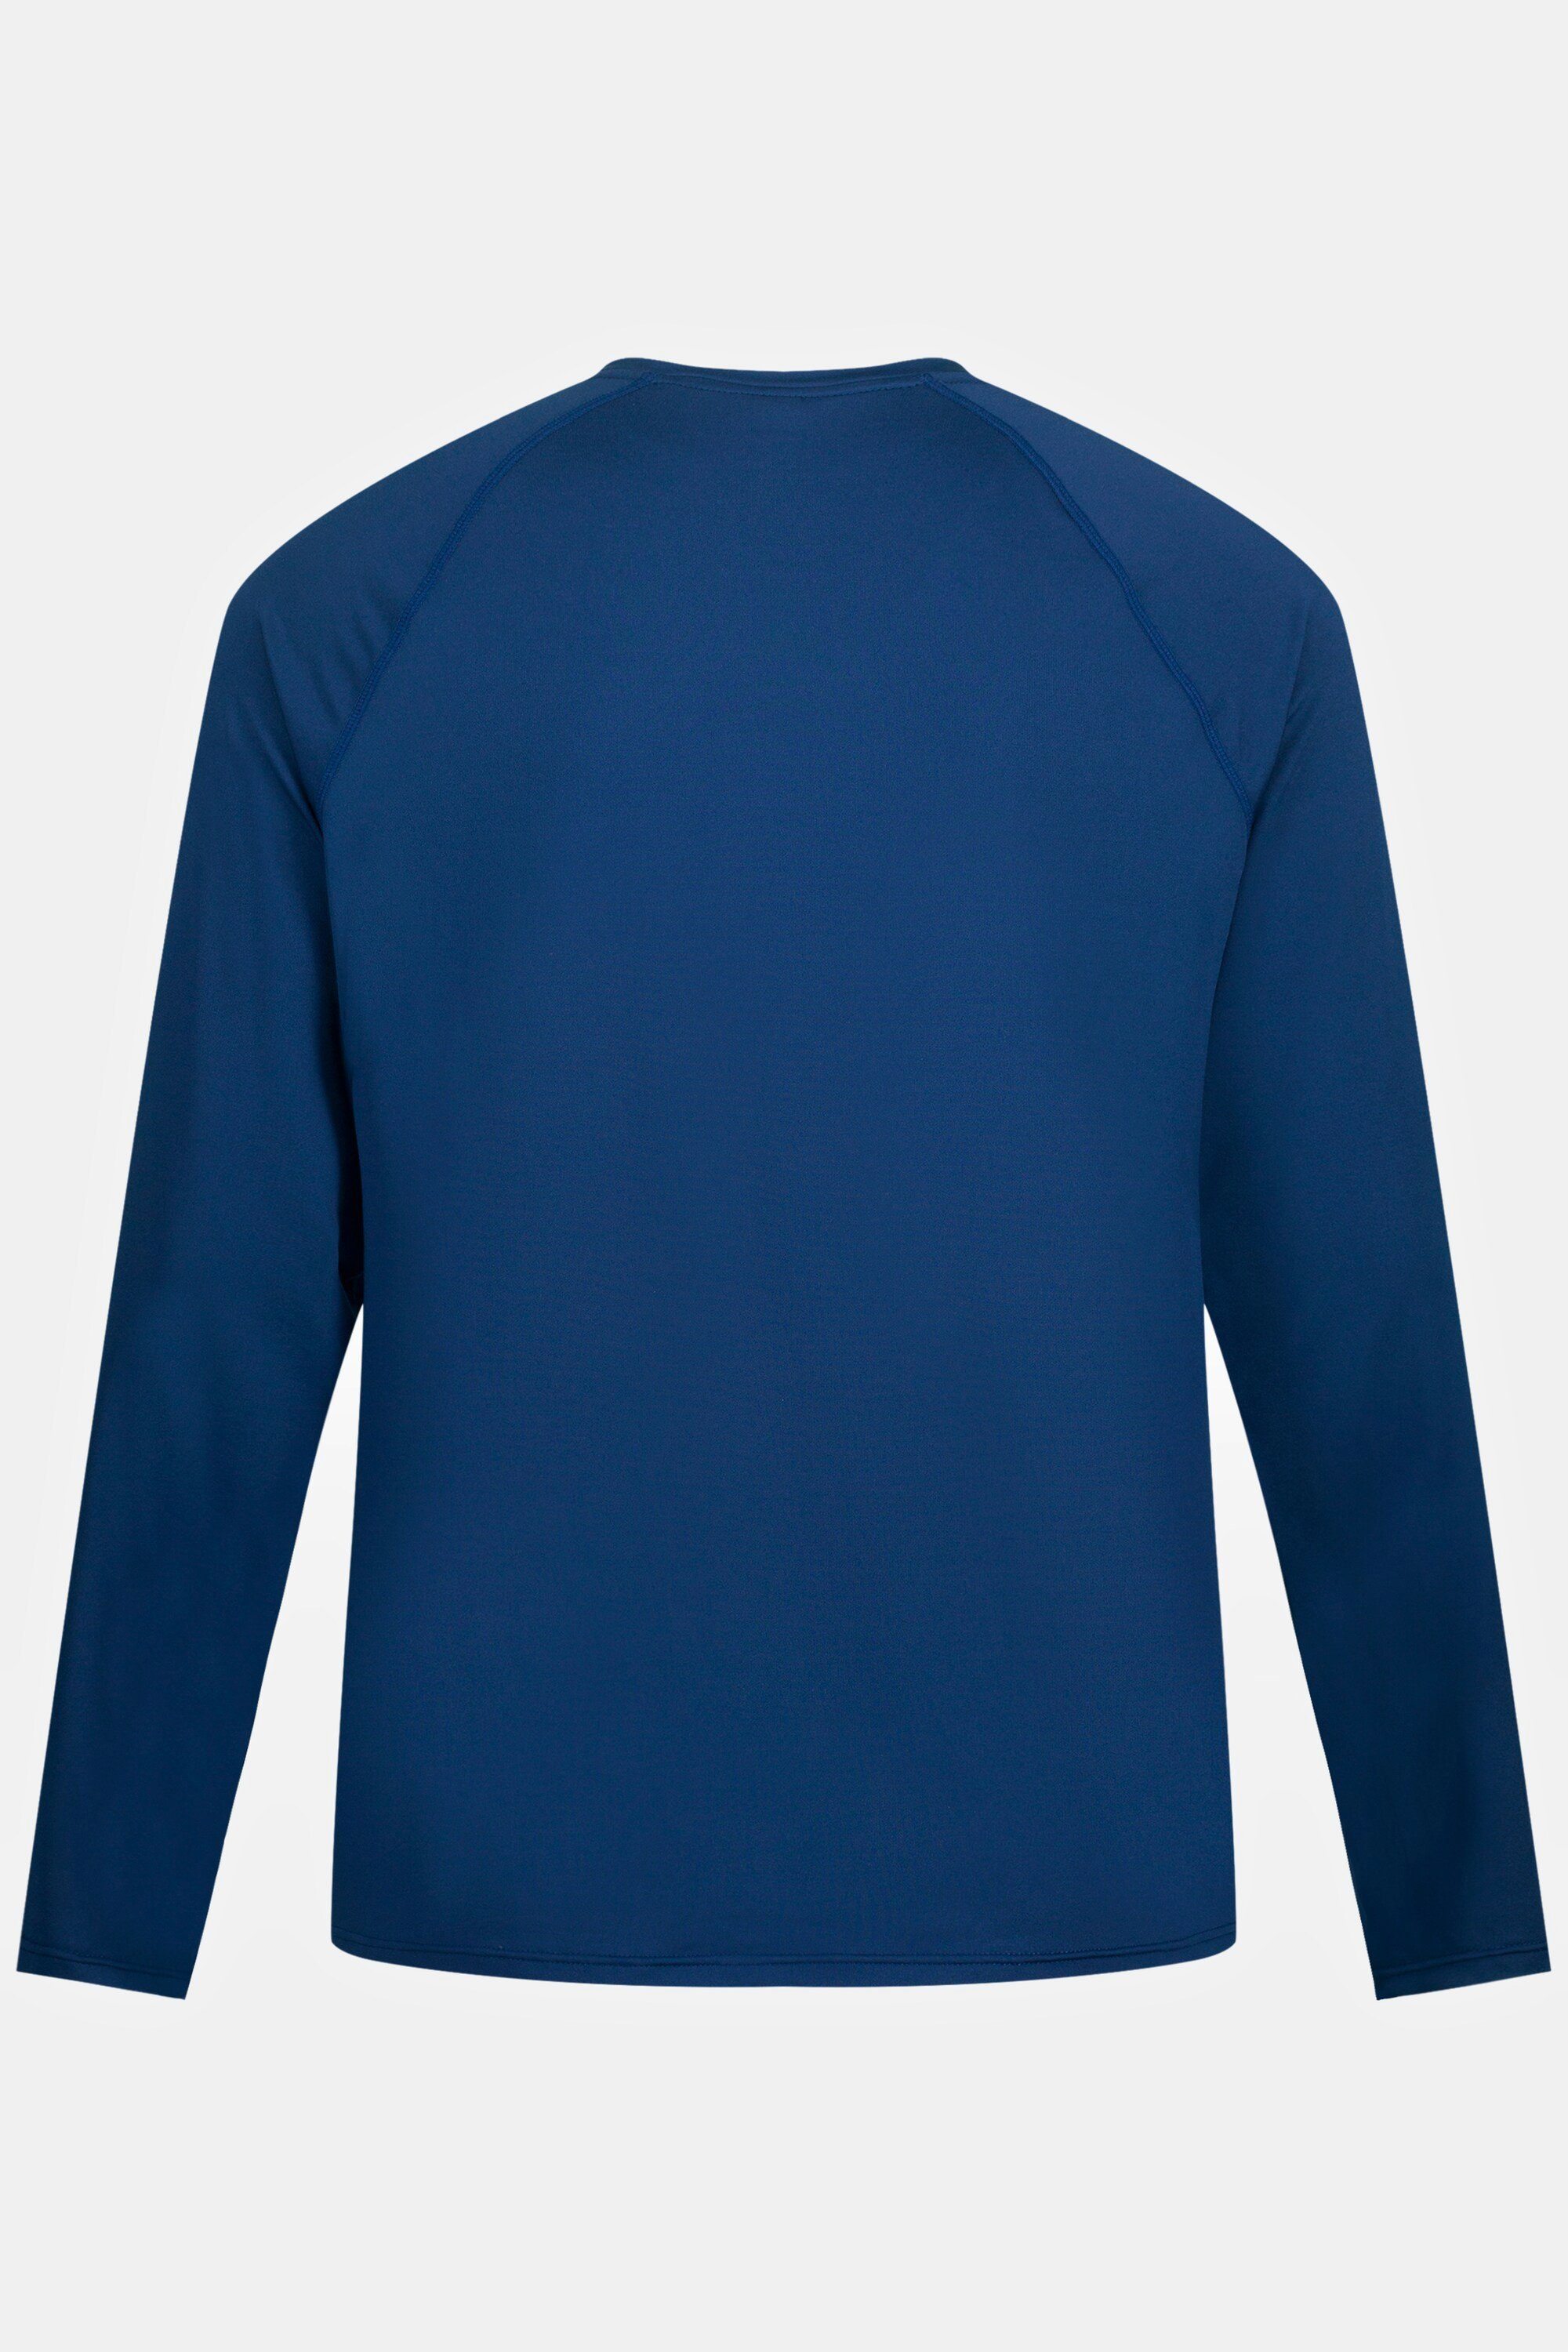 FLEXNAMIC® JP1880 Funktions-Shirt T-Shirt dunkelindigo Langarm QuickDry